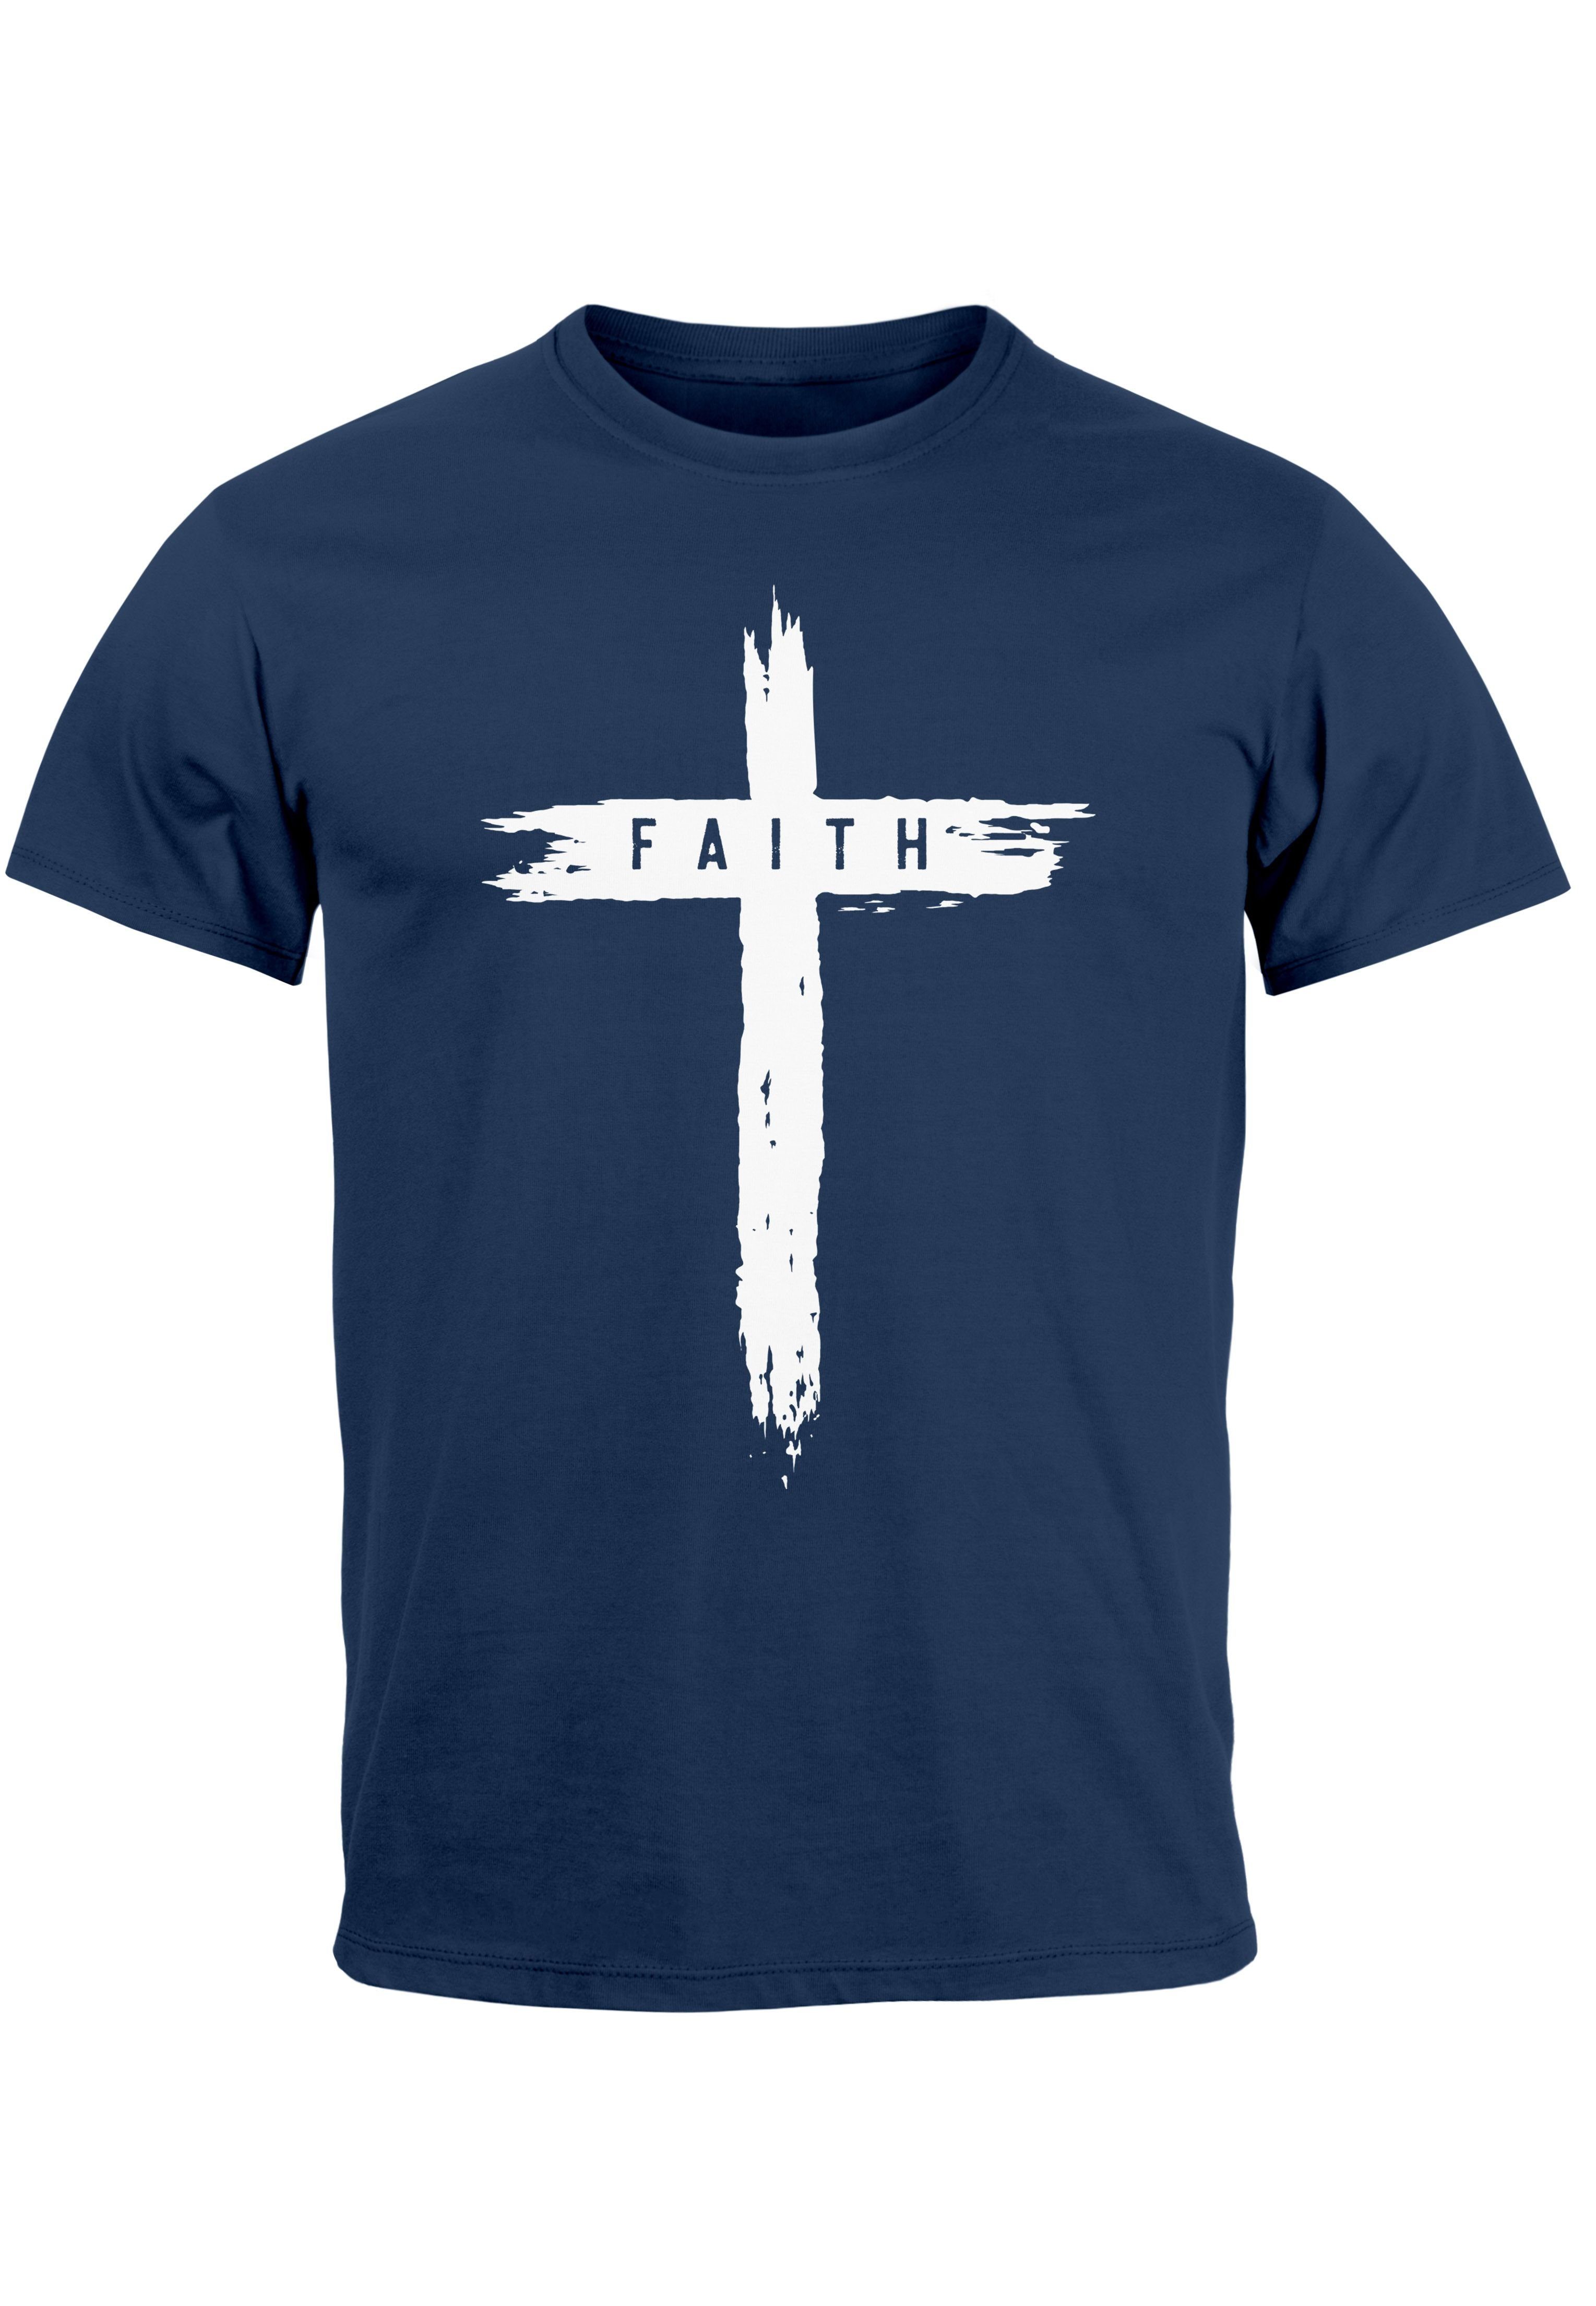 Neverless Print-Shirt Herren T-Shirt Printshirt Aufdruck Kreuz Cross Faith Glaube Trend-Moti mit Print navy